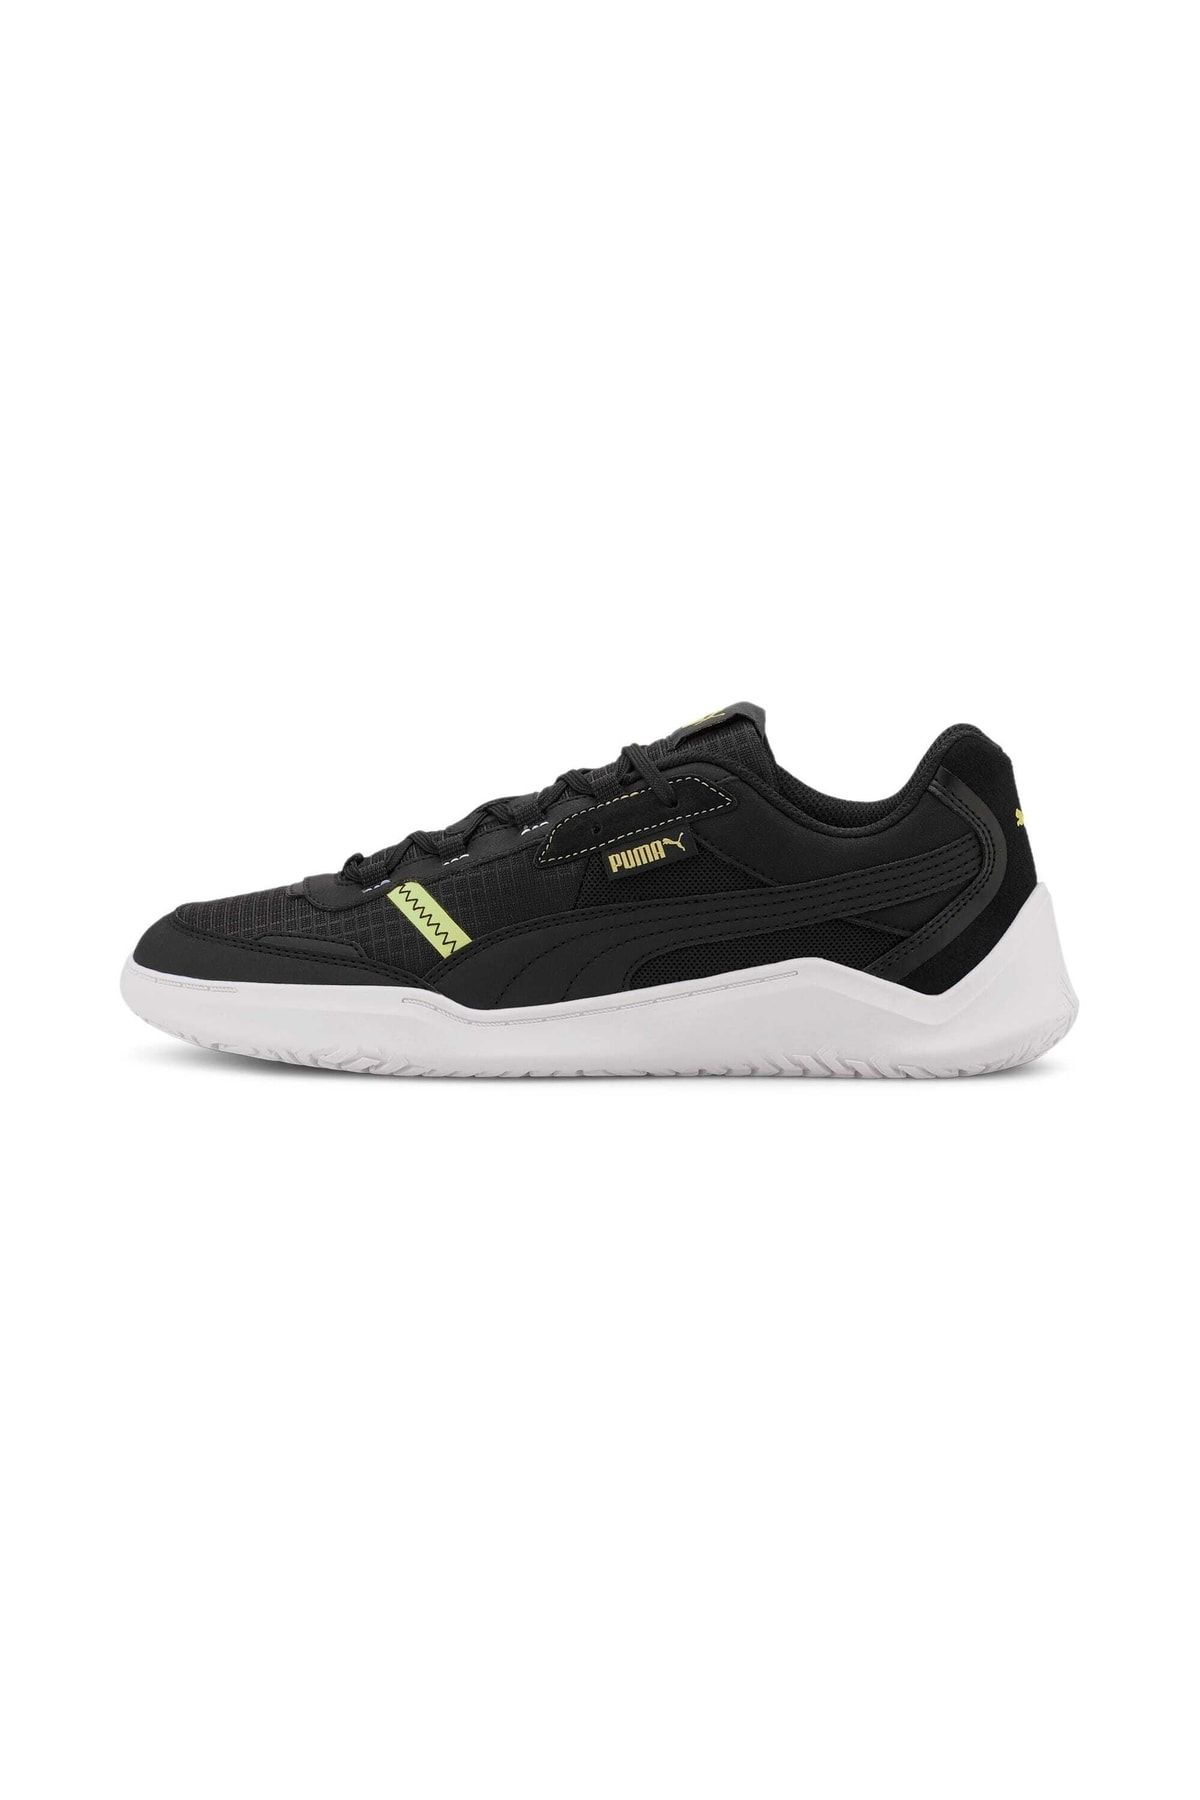 Puma DC FUTURE Siyah Erkek Sneaker Ayakkabı 101119287